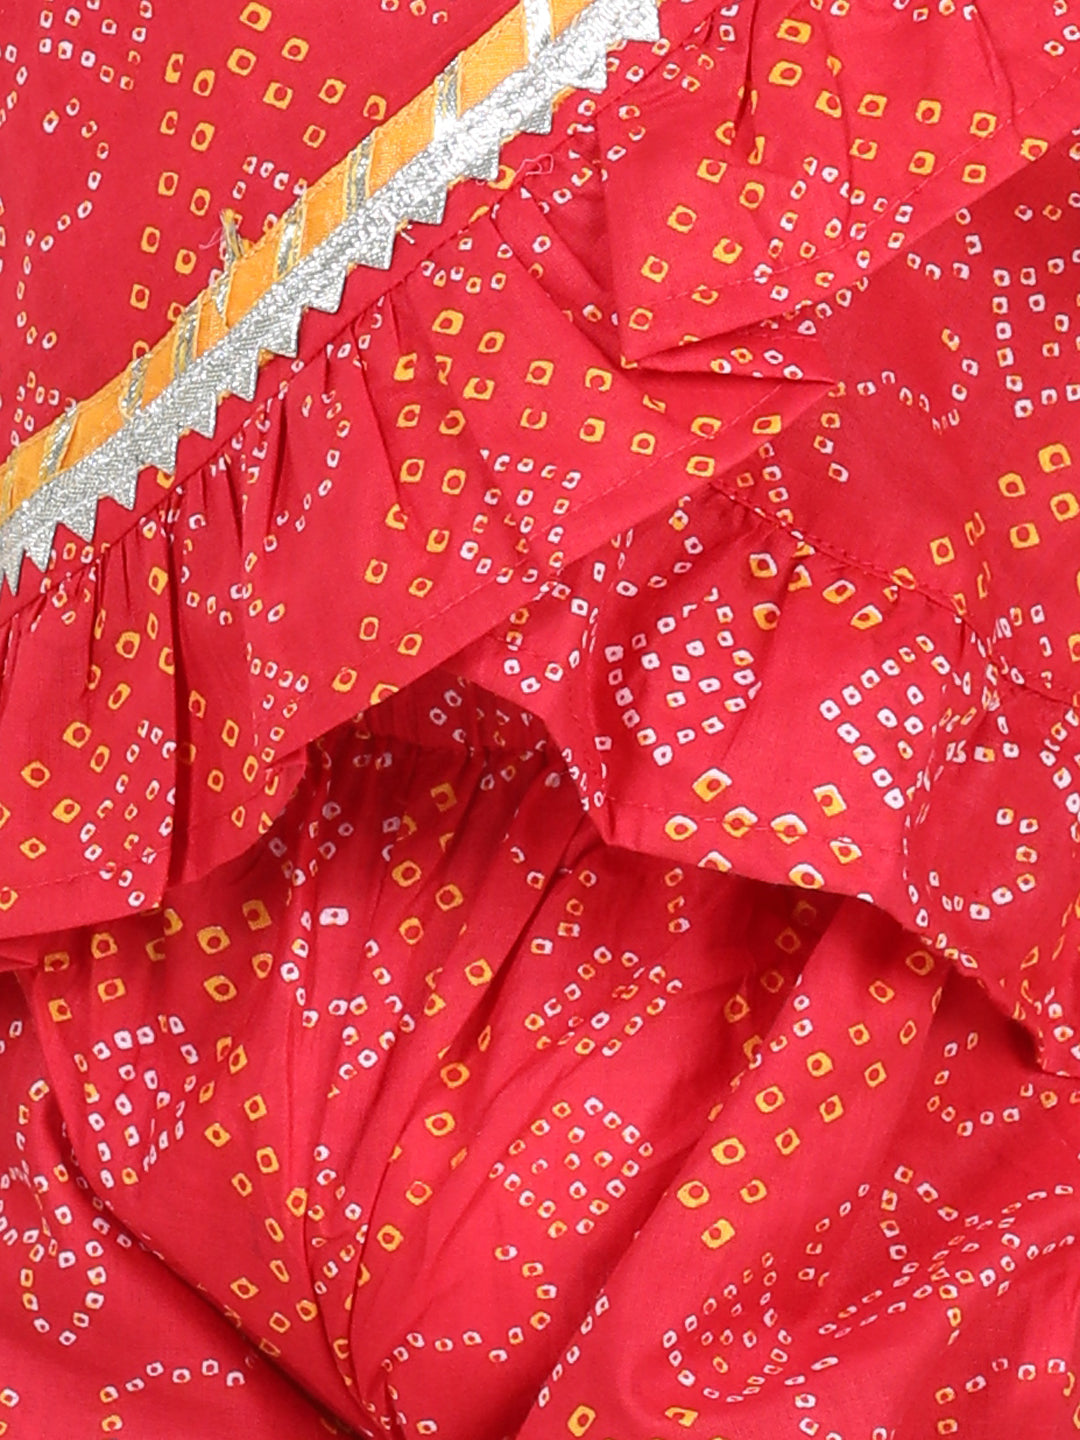 BownBee Front Open Cotton Bandhni Print Baby Full Sleeve Kurta Pyjama for Girls - Red